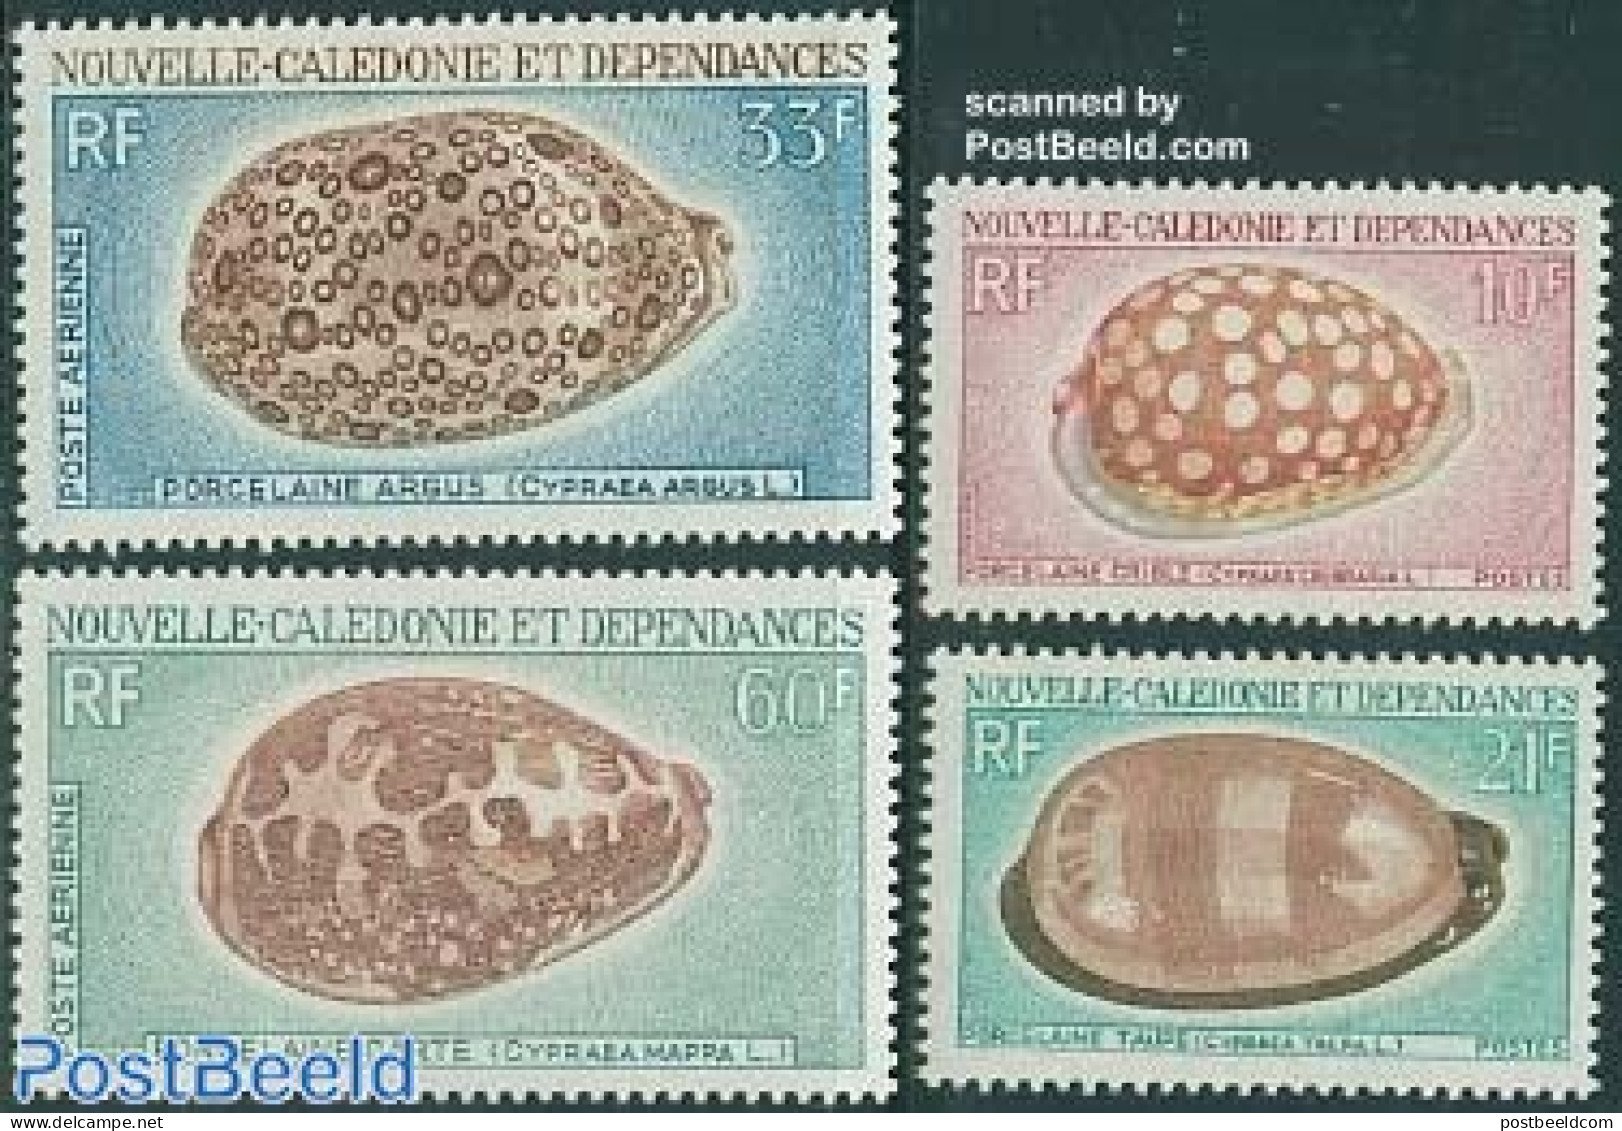 New Caledonia 1970 Shells 4v, Mint NH, Nature - Shells & Crustaceans - Ungebraucht